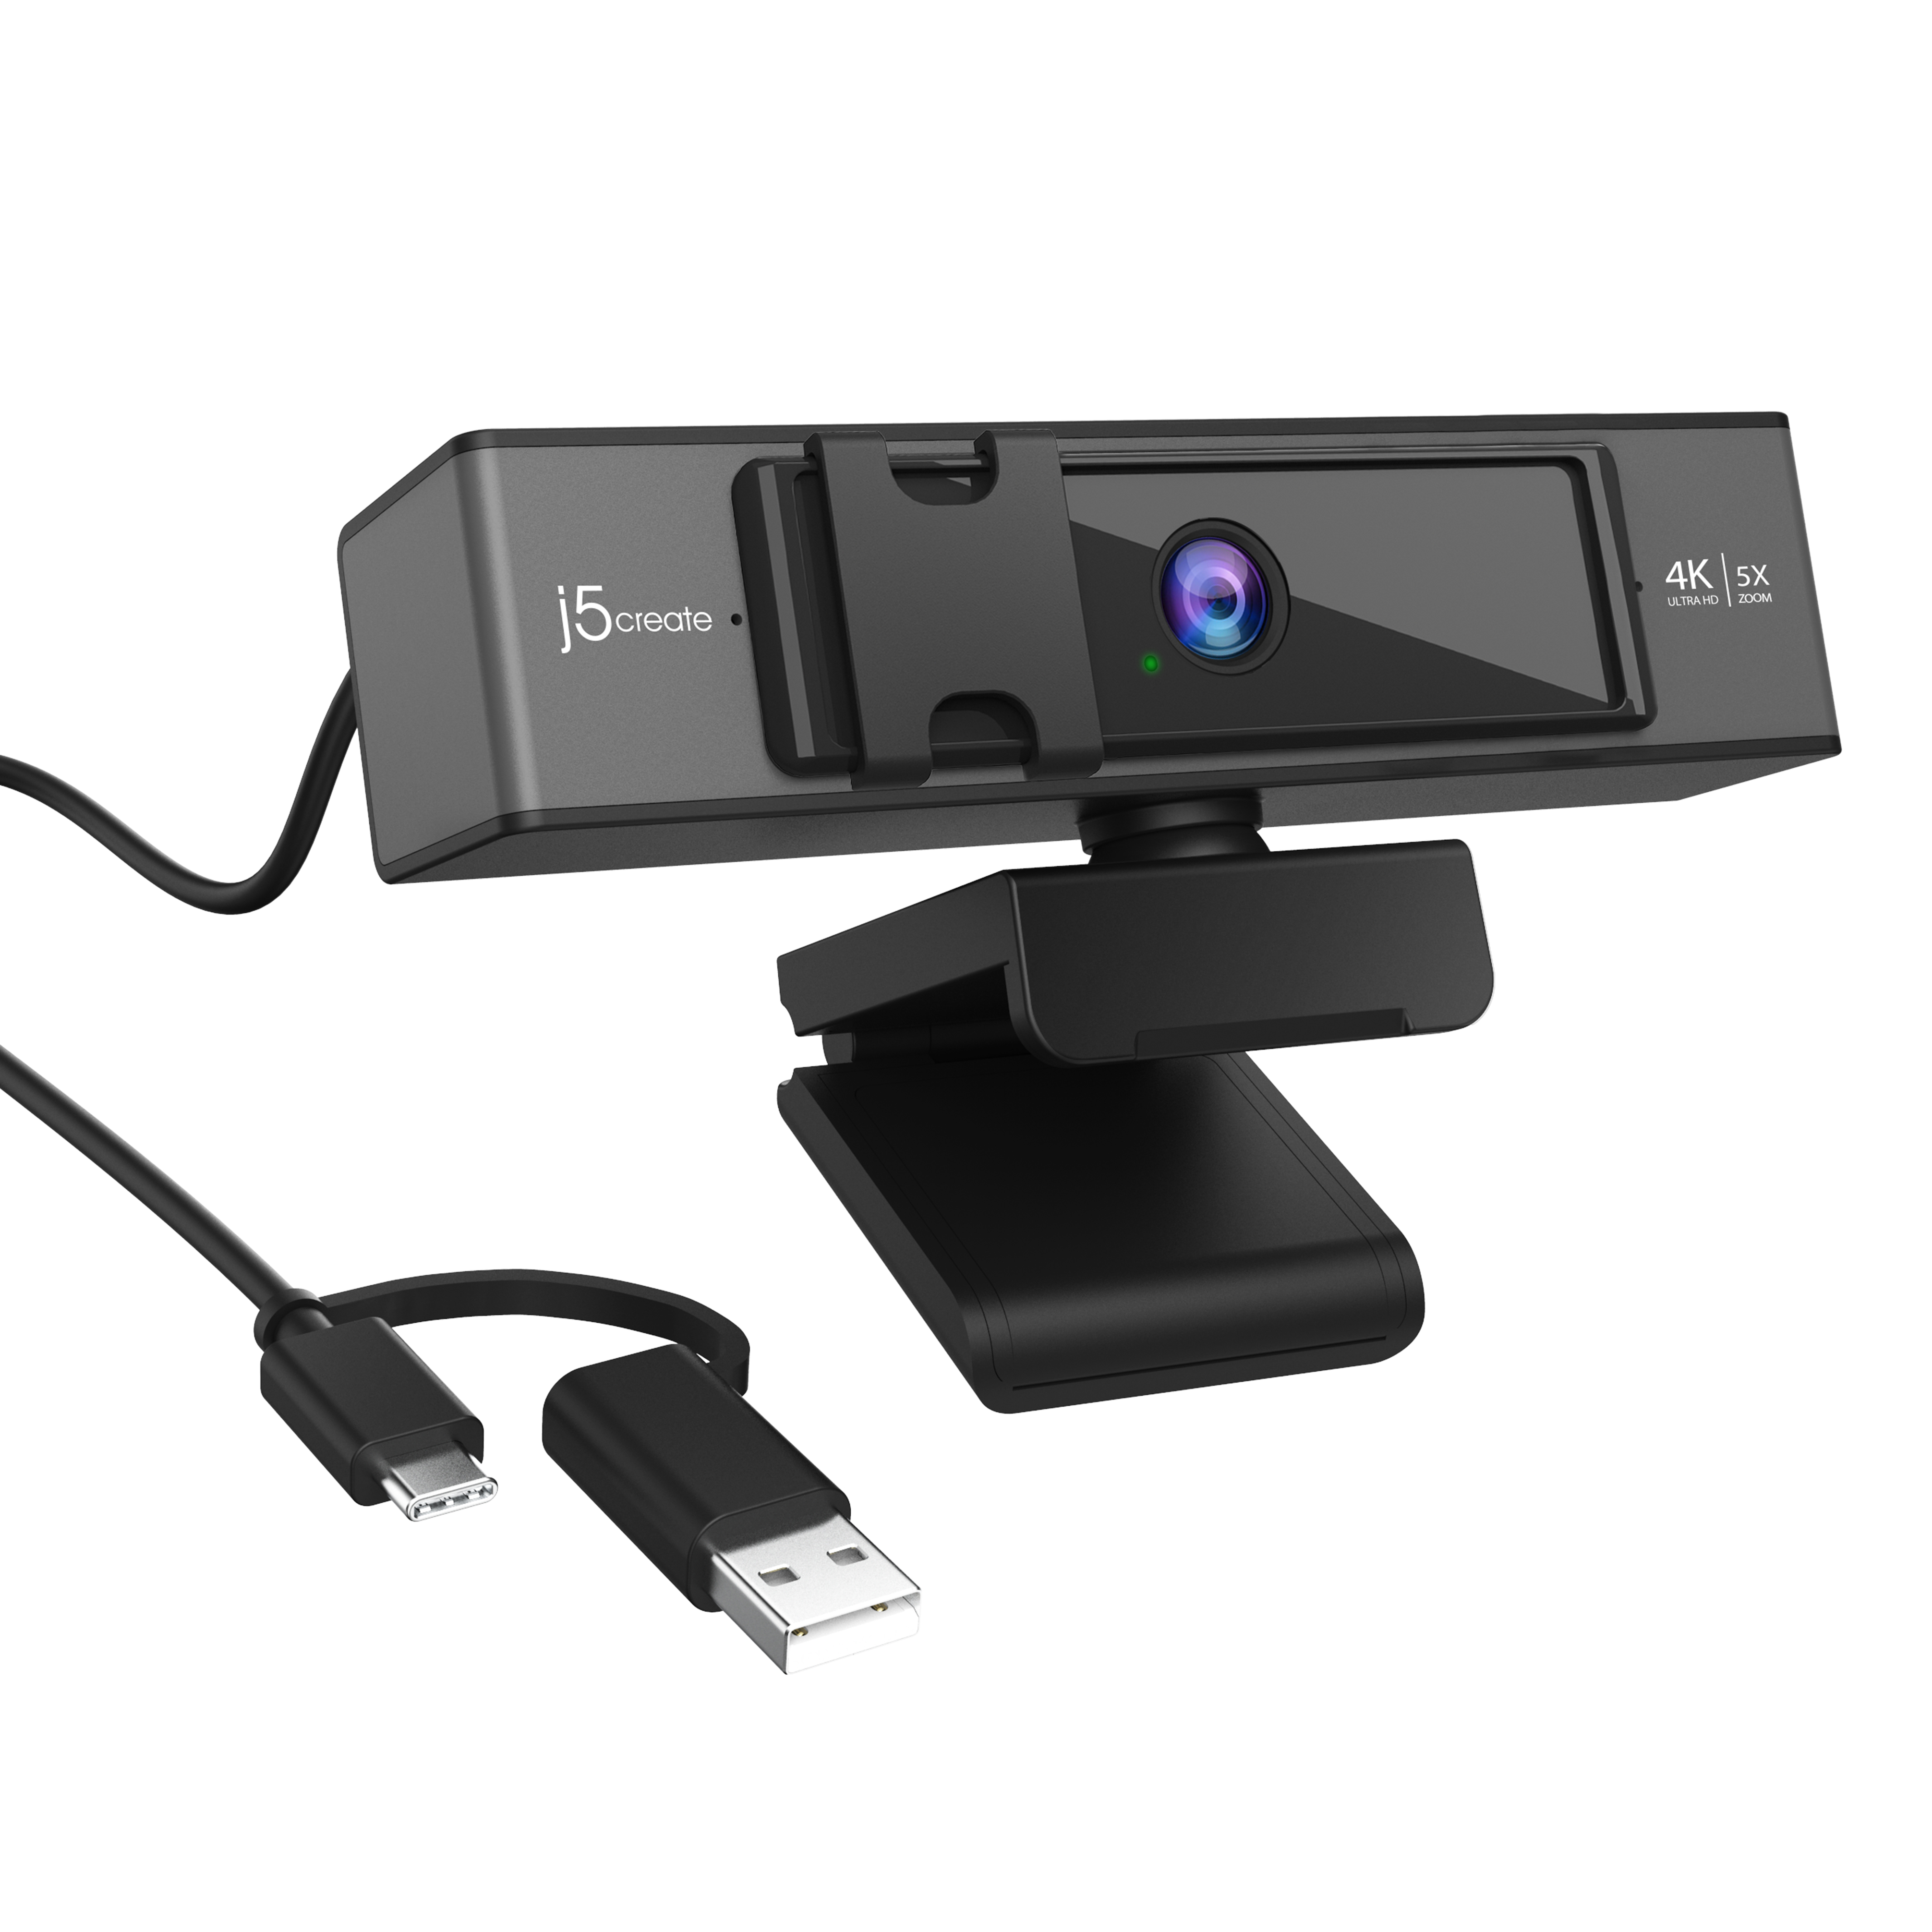 Ultra Remote USB J5CREATE HD 4K Control JVCU435-N Webcam Digital 5x Zoom